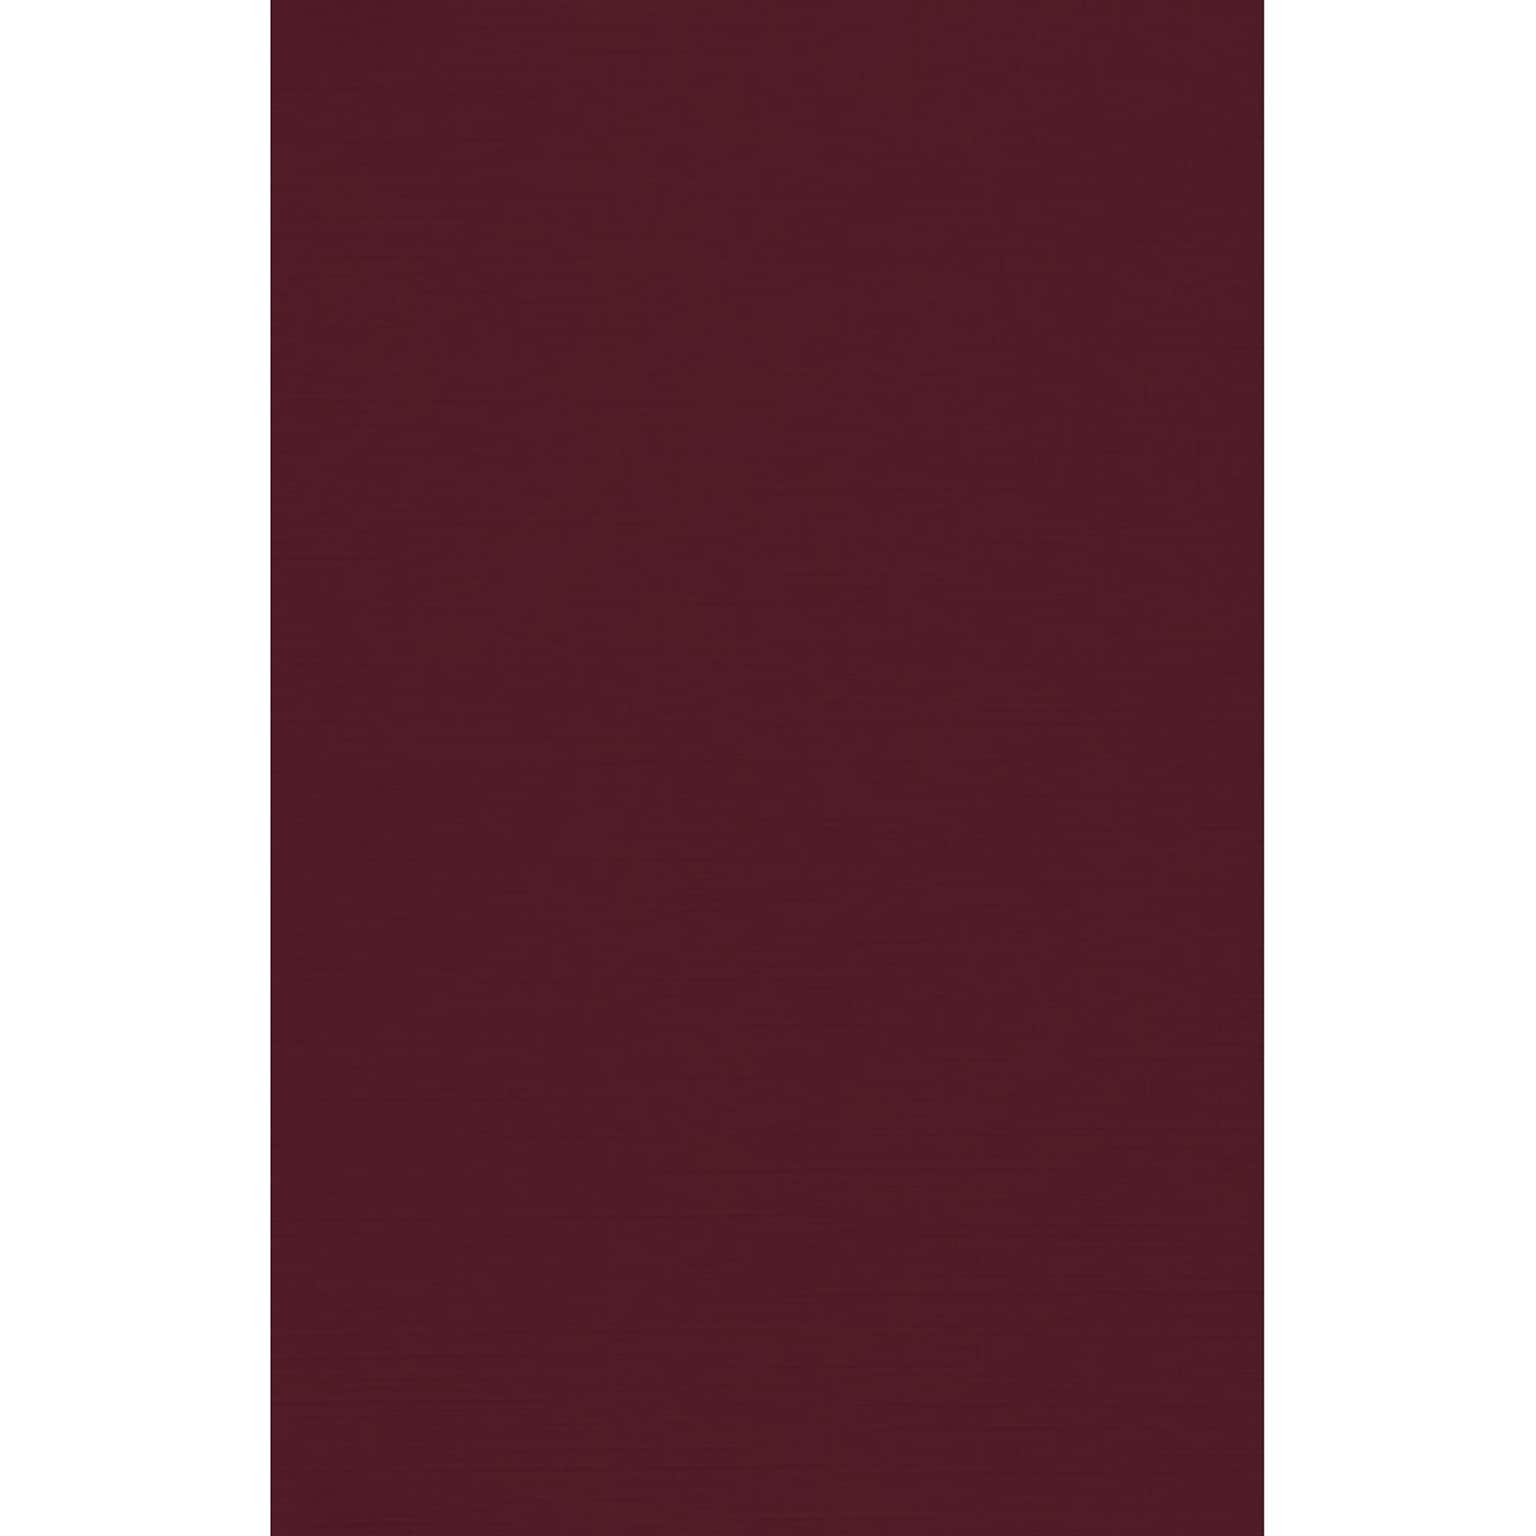 JAM PAPER 11 x 17 Cardstock, 100lb, Burgundy Linen, 50/pack  (1117-C-BGLI-50)